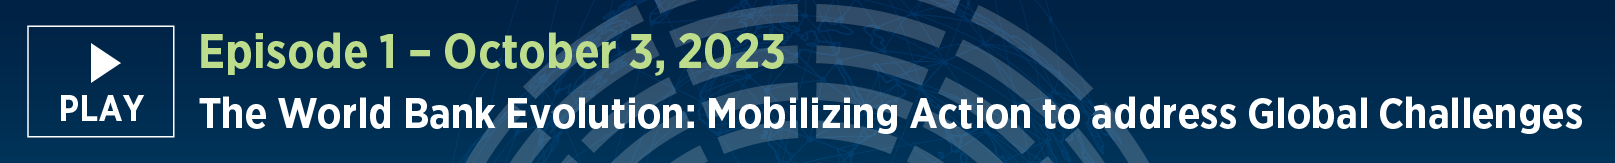 Episode 1: The World Bank Evolution: Mobilizing Action to Address Global Challenges